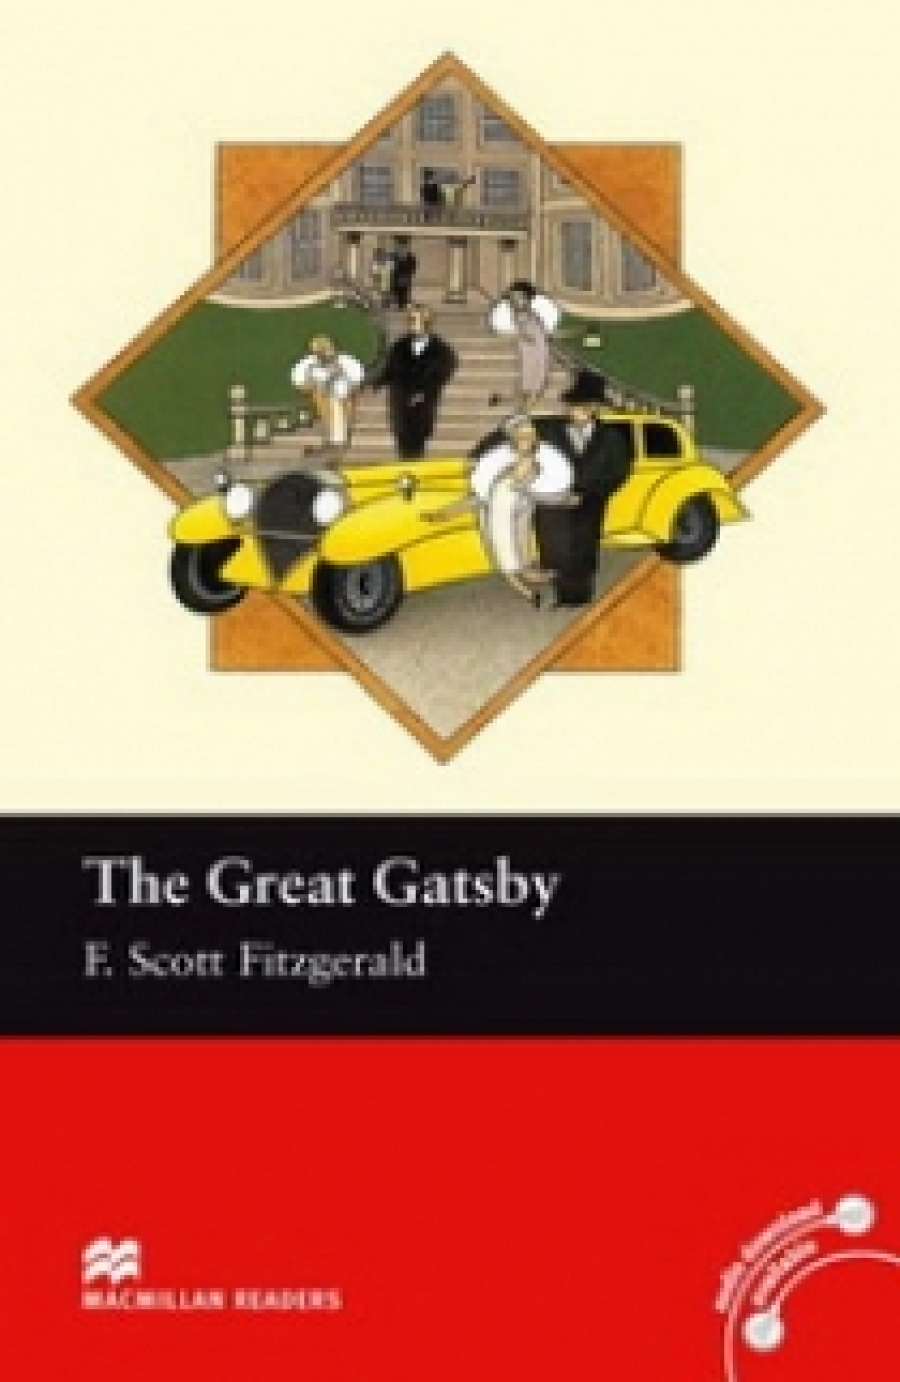 F. Scott Fitzgerald, retold by Margaret Tarner The Great Gatsby 